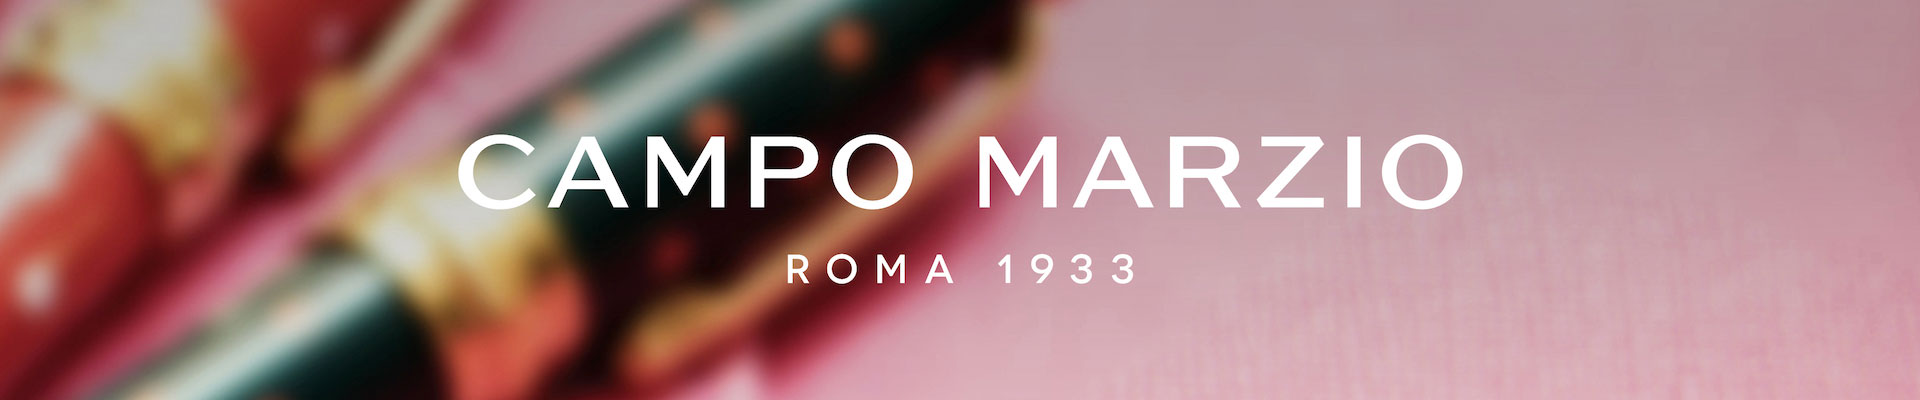 Campo-Marzio-hero-1920-x-400